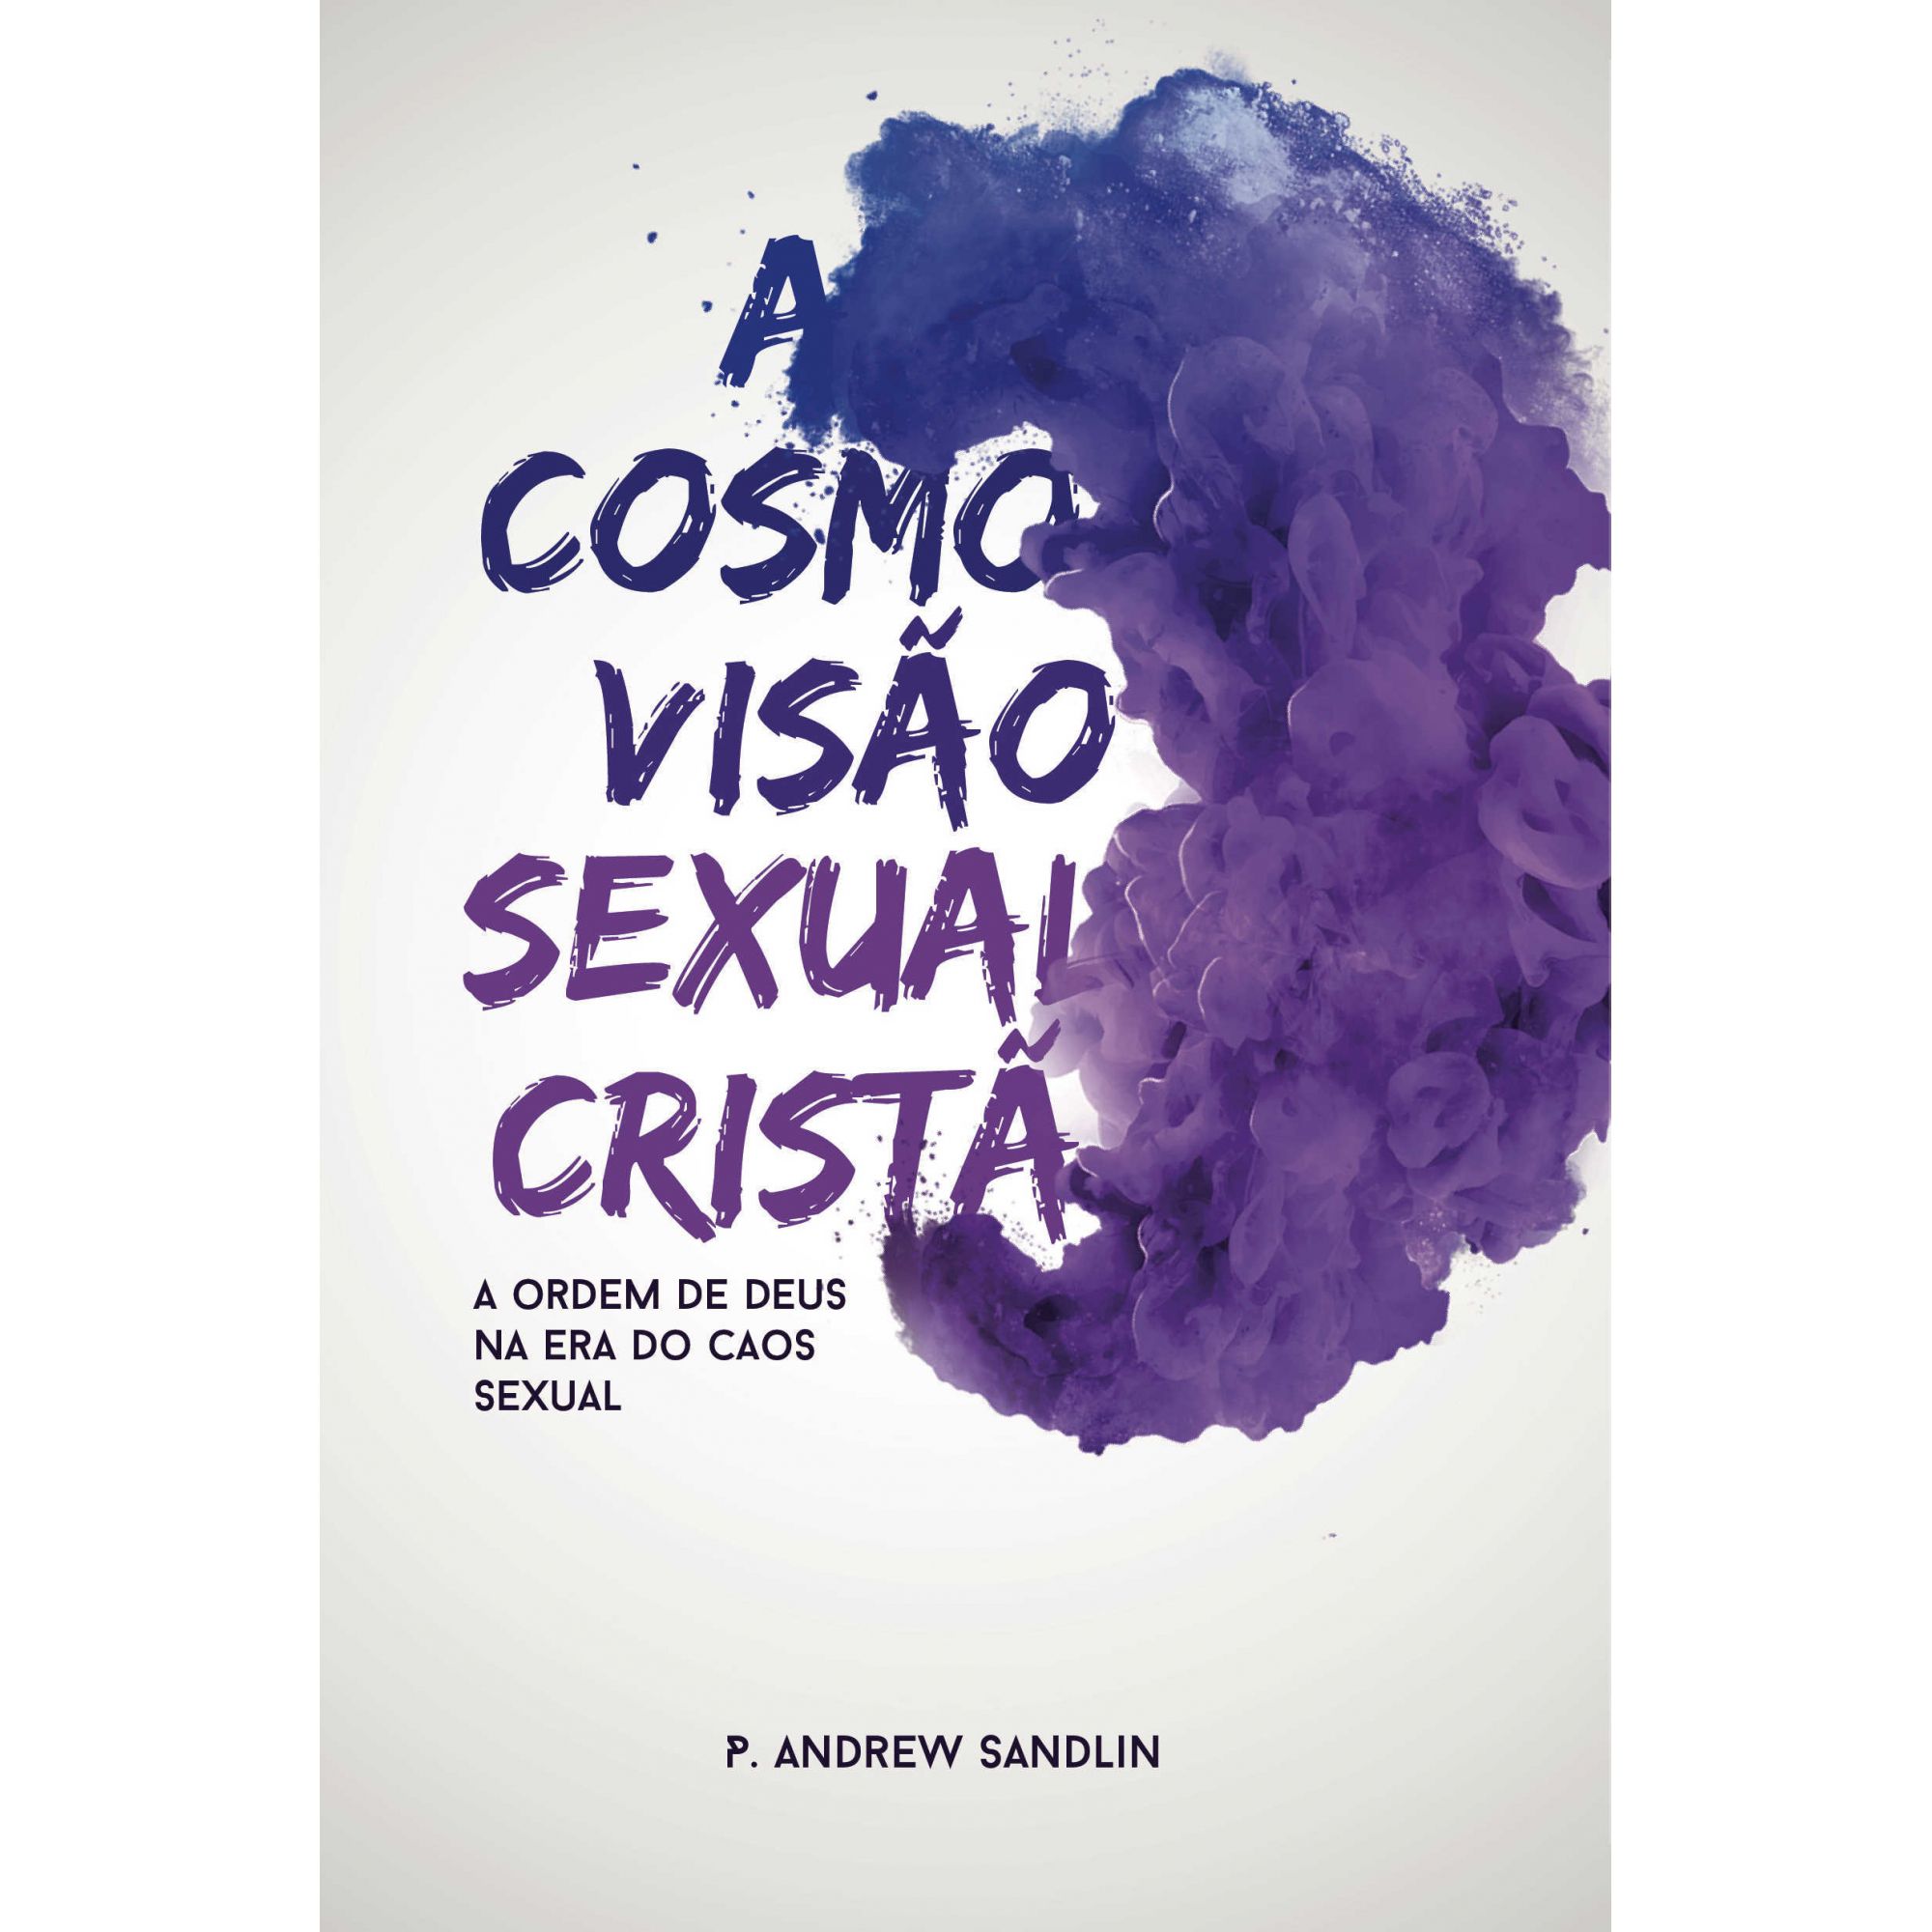 A Cosmovisão Sexual Cristã | P. Andrew Sandlin